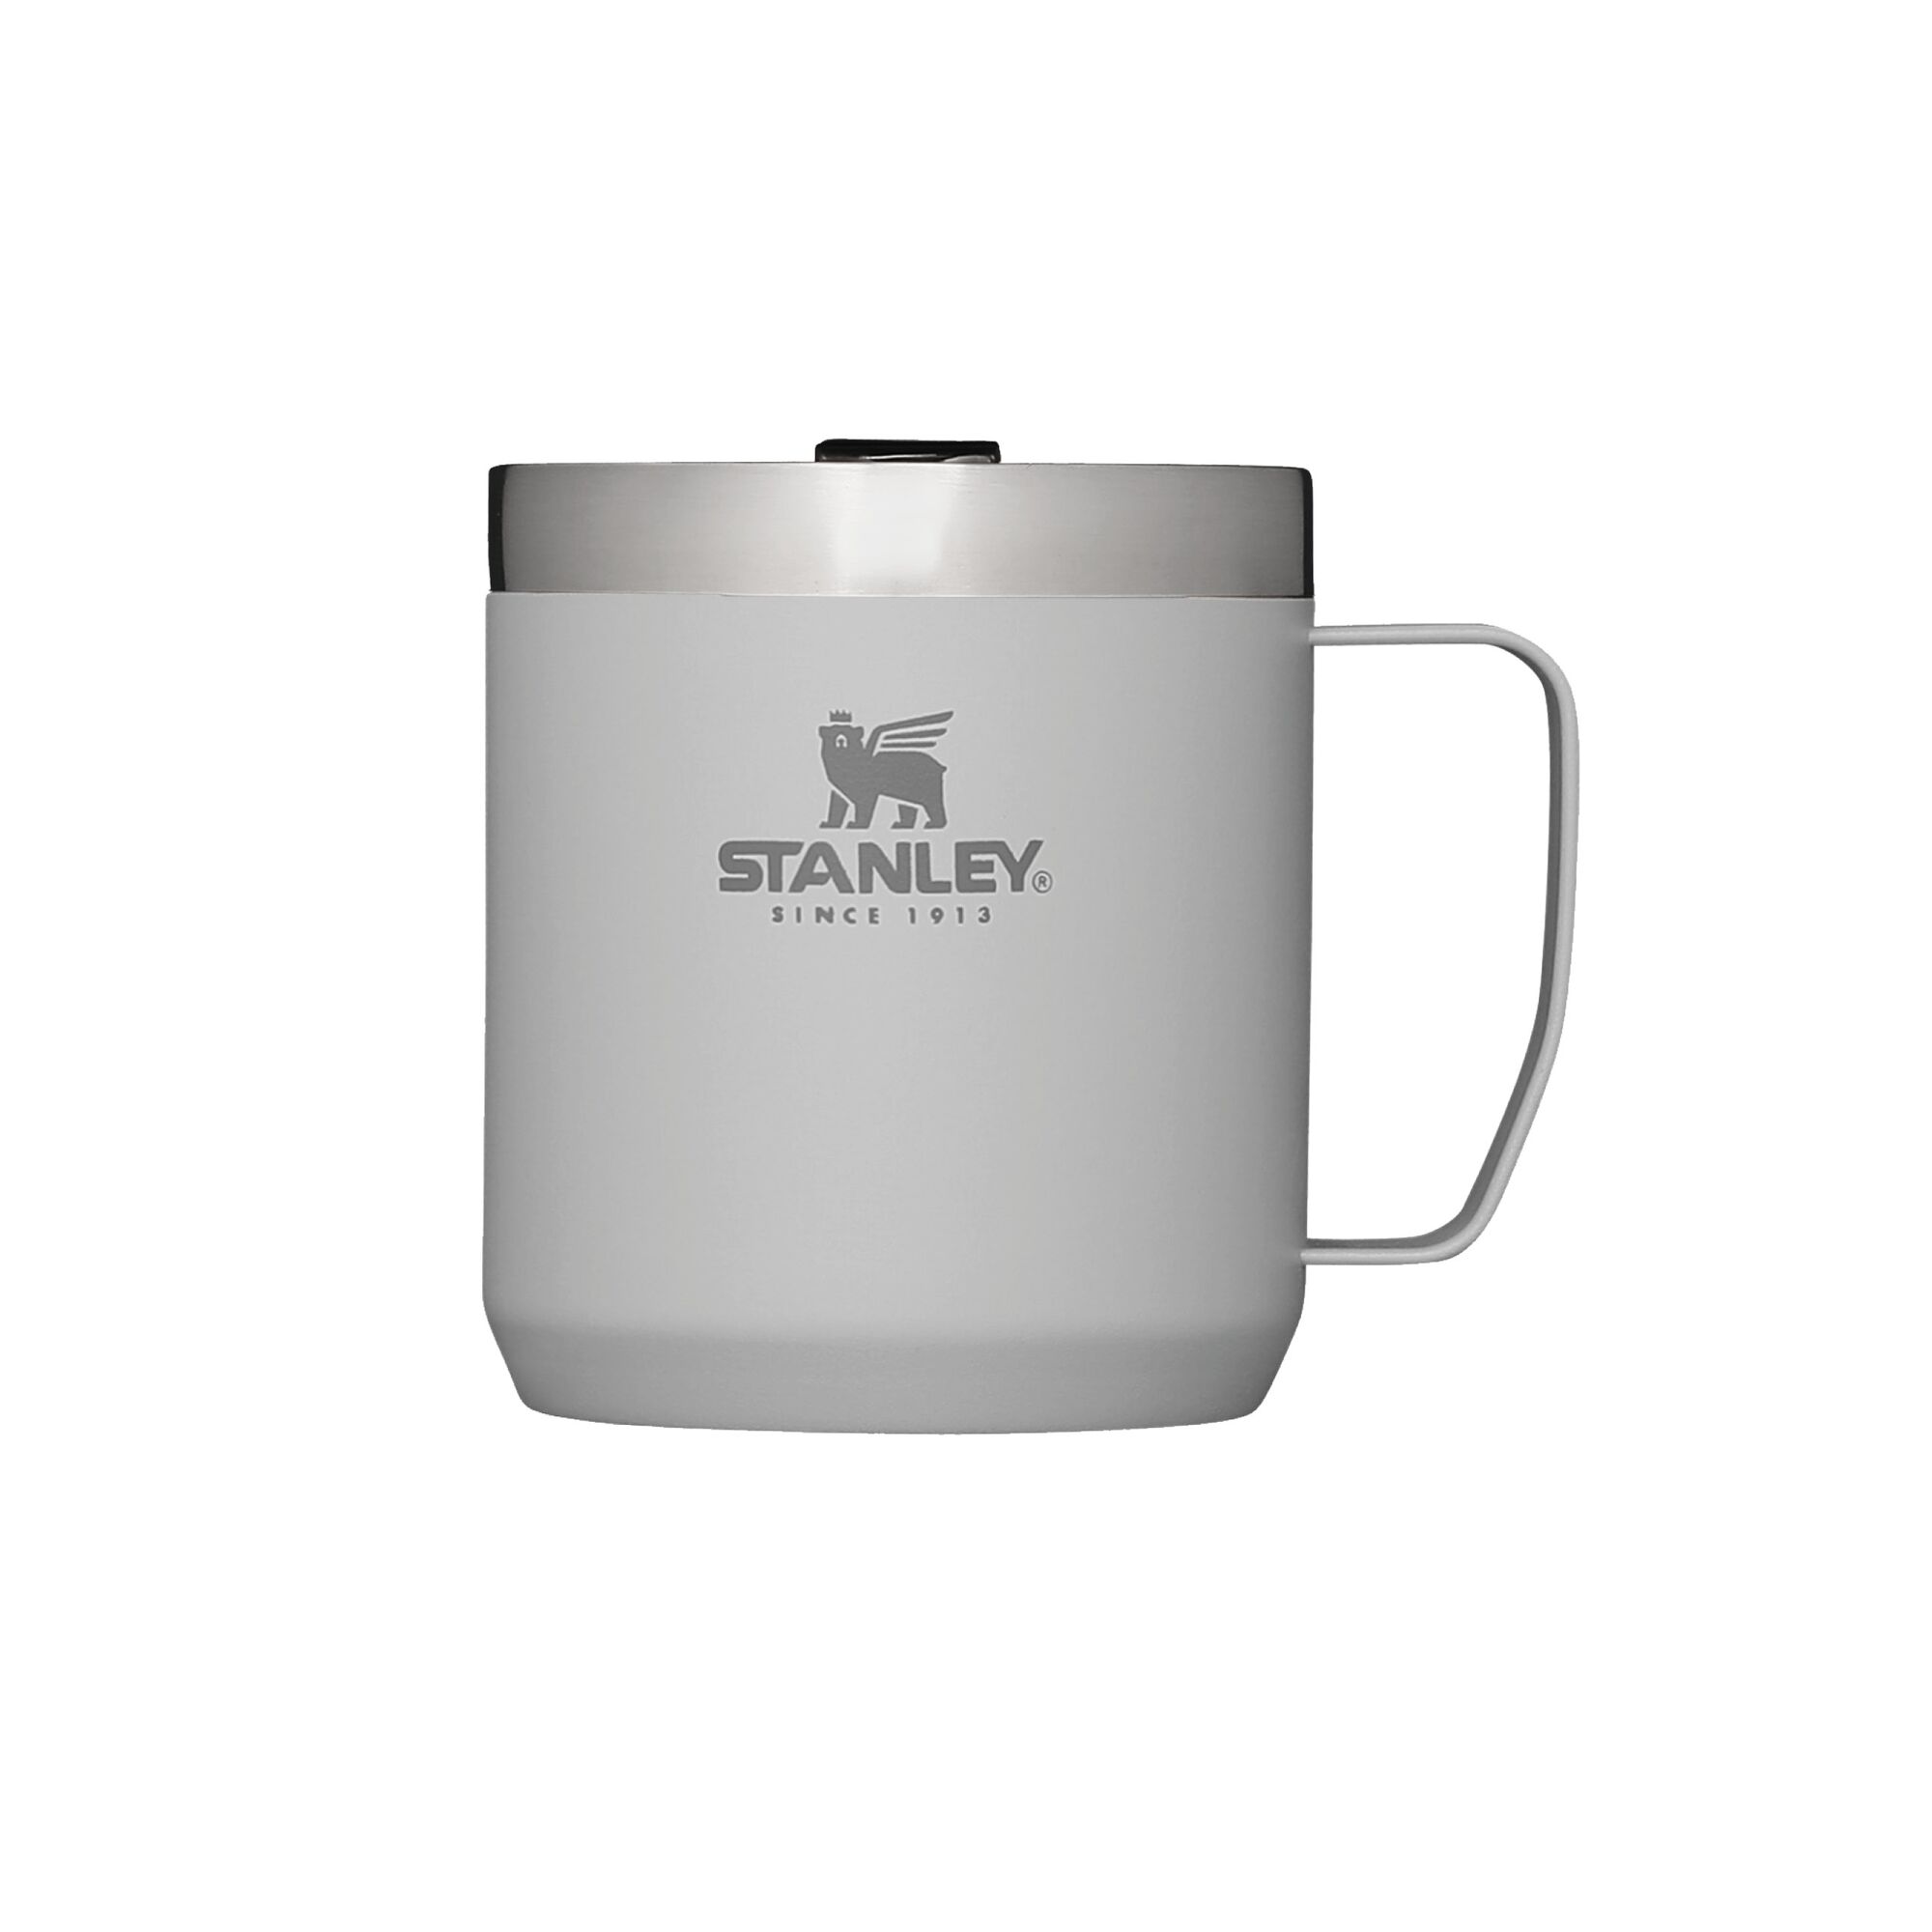 Stanley The Legendary Camp mug 350 ml - Hammertone Green